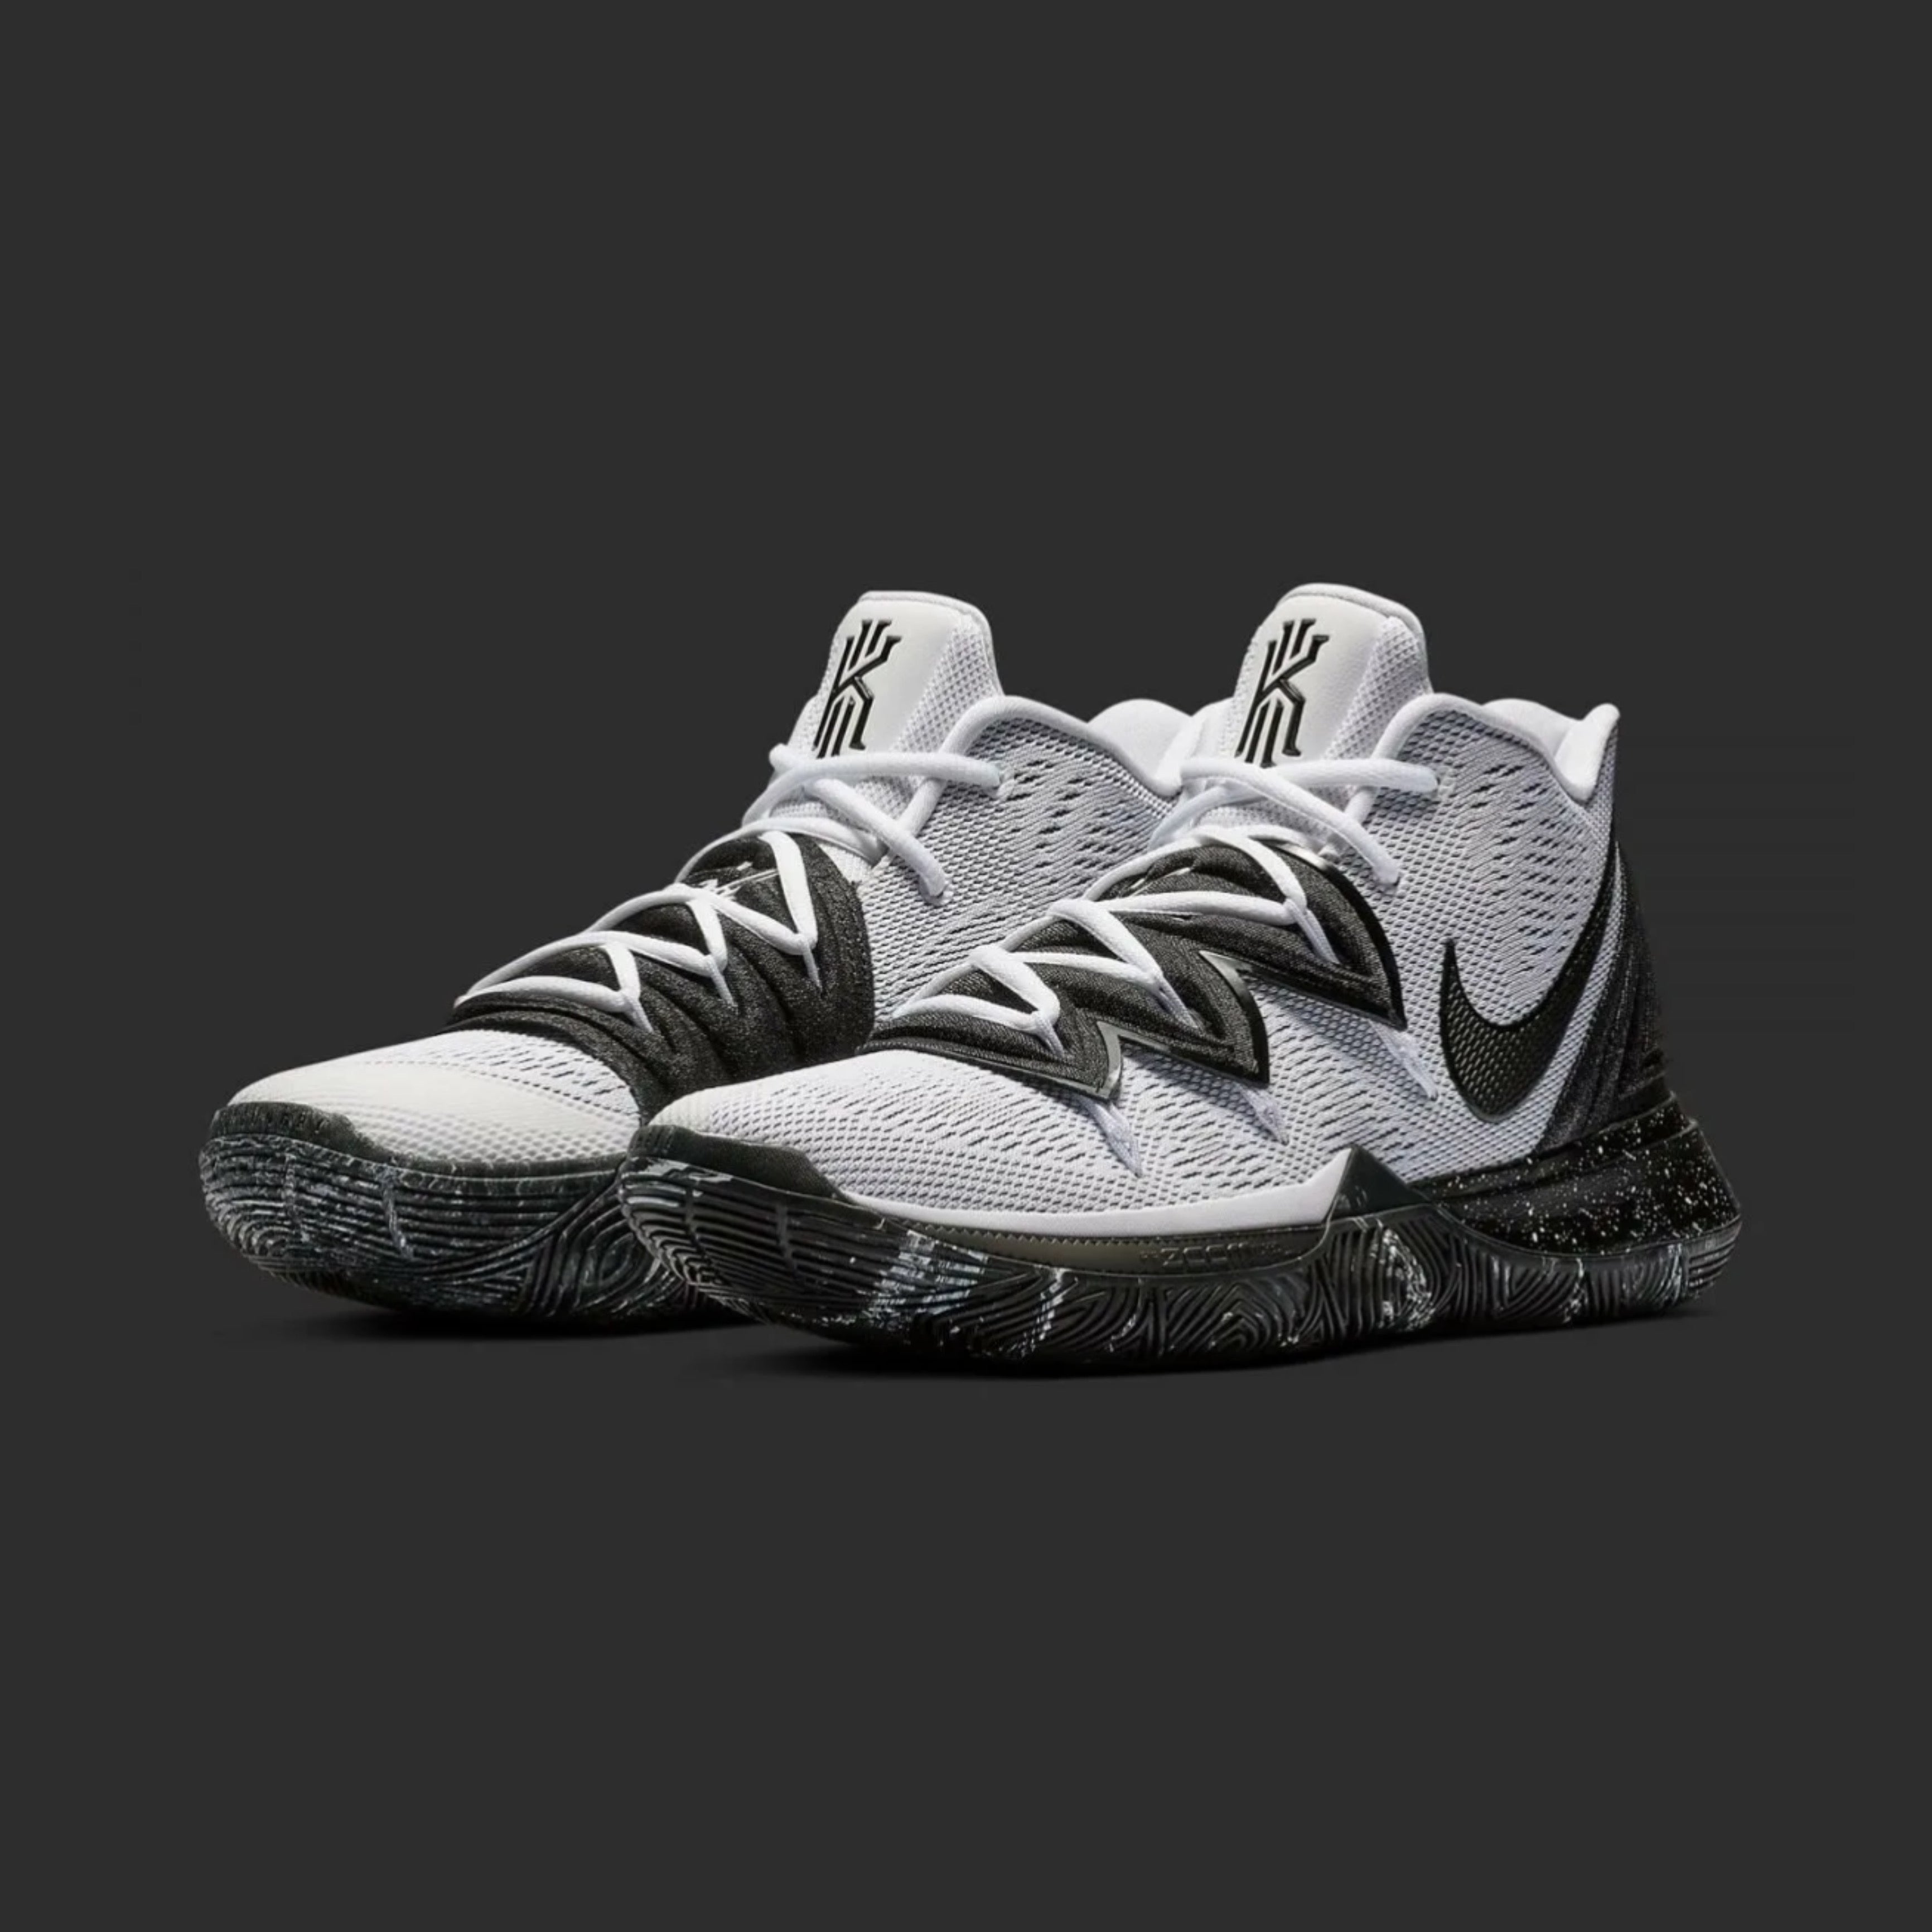 Nike Kyrie 5 black and white